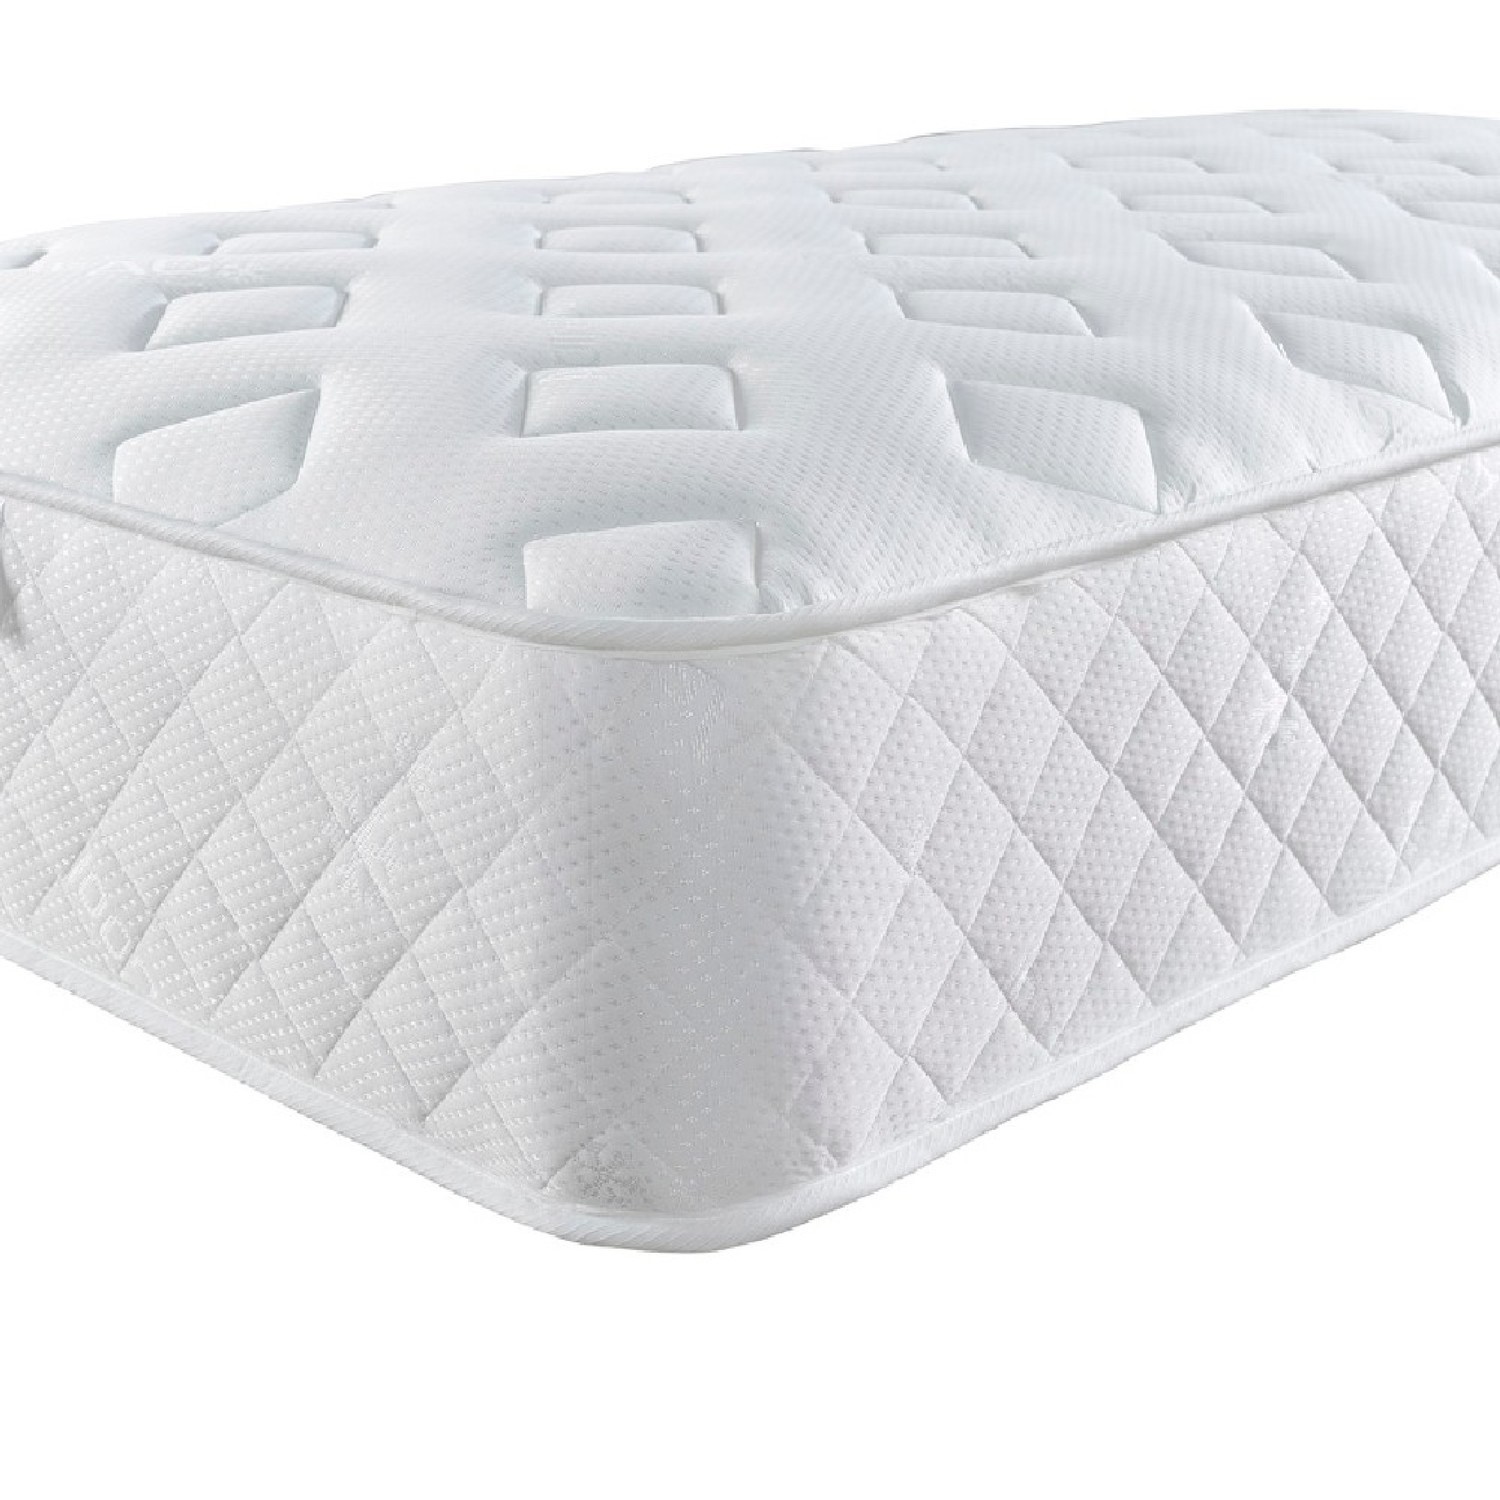 Aspire furniture comfort eco hybrid memory foam & spring mattress - small double